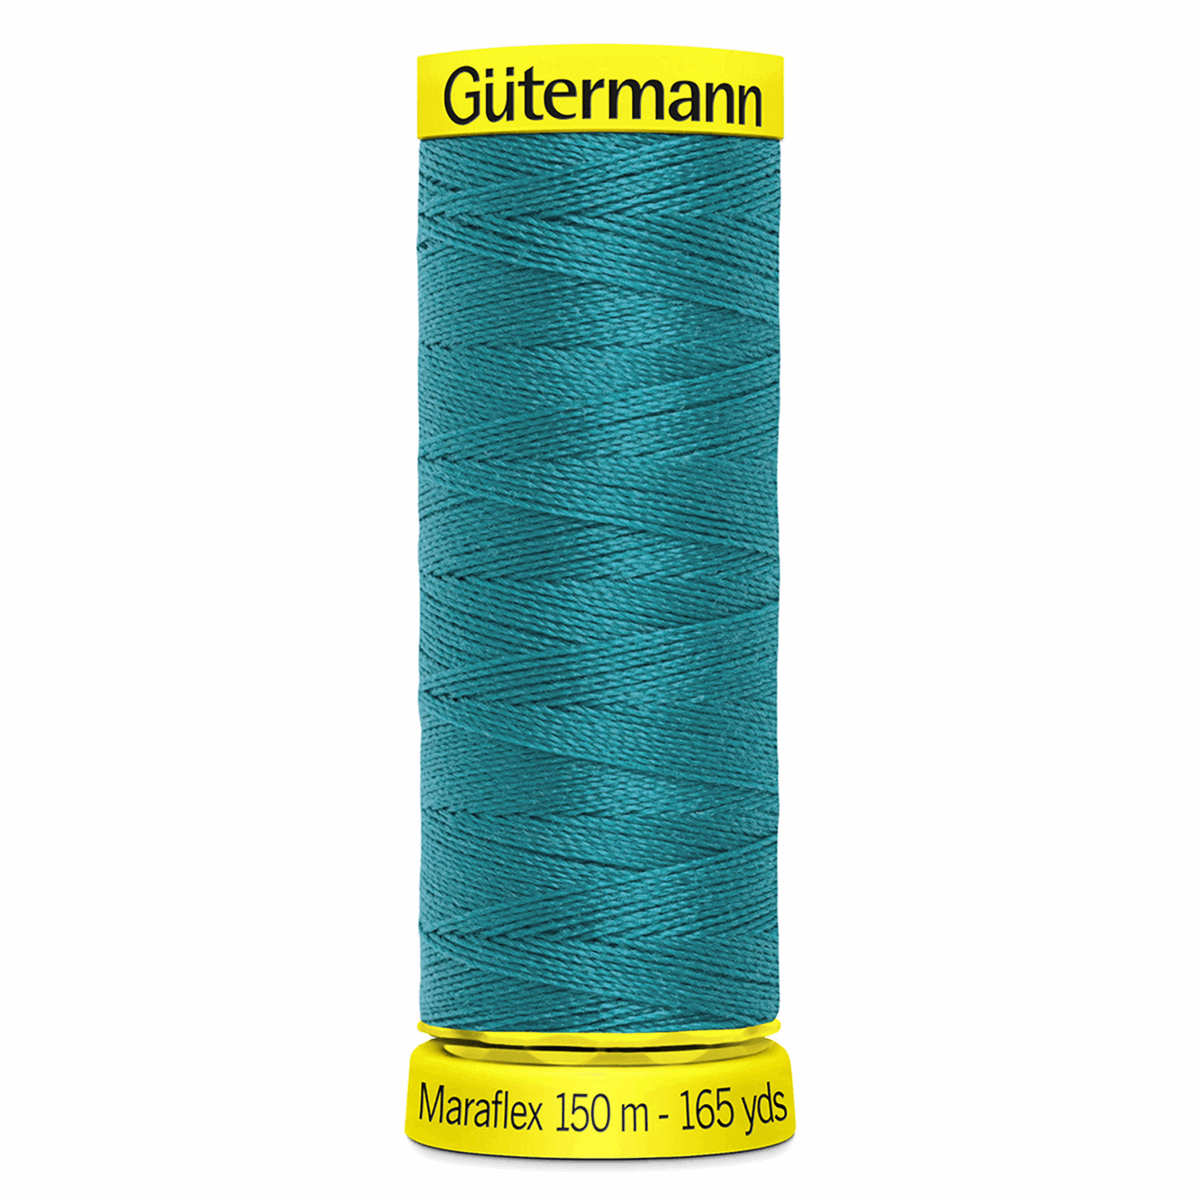 Gutermann Maraflex Elastic Sewing Thread 150m Teal 189